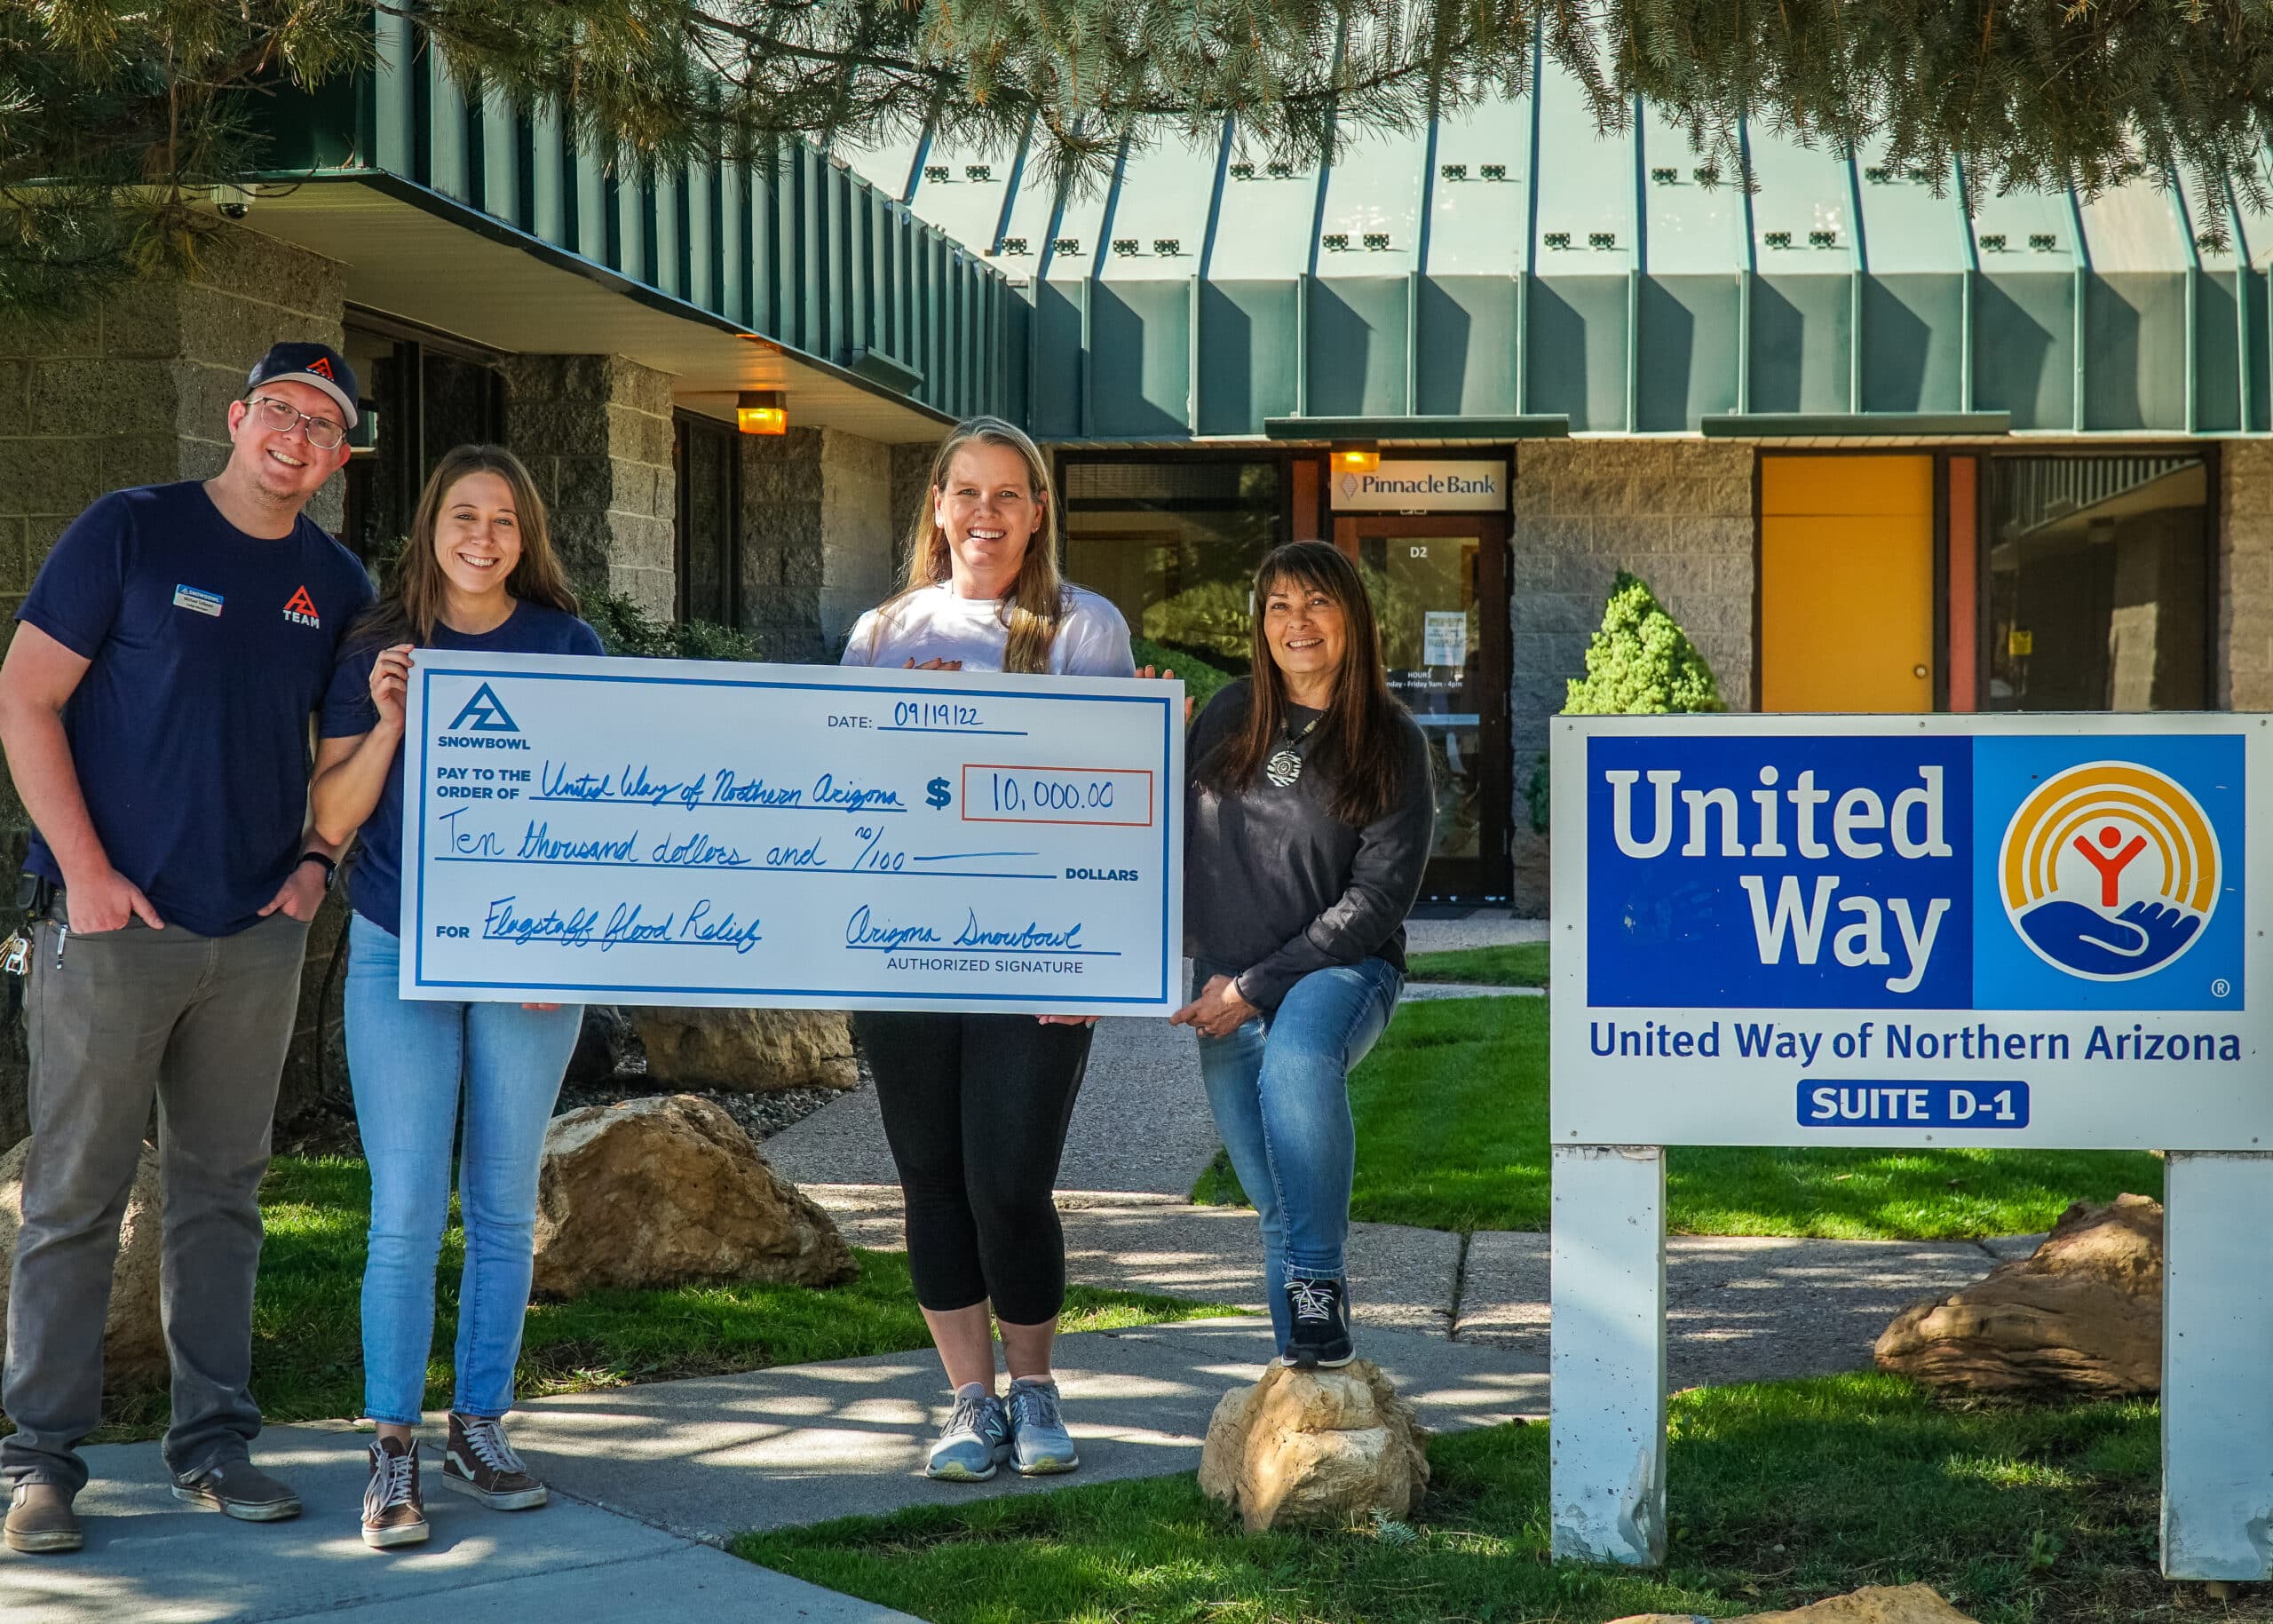 Snowbowl employees handing over $10,000 check to United Way of Northern Arizona.